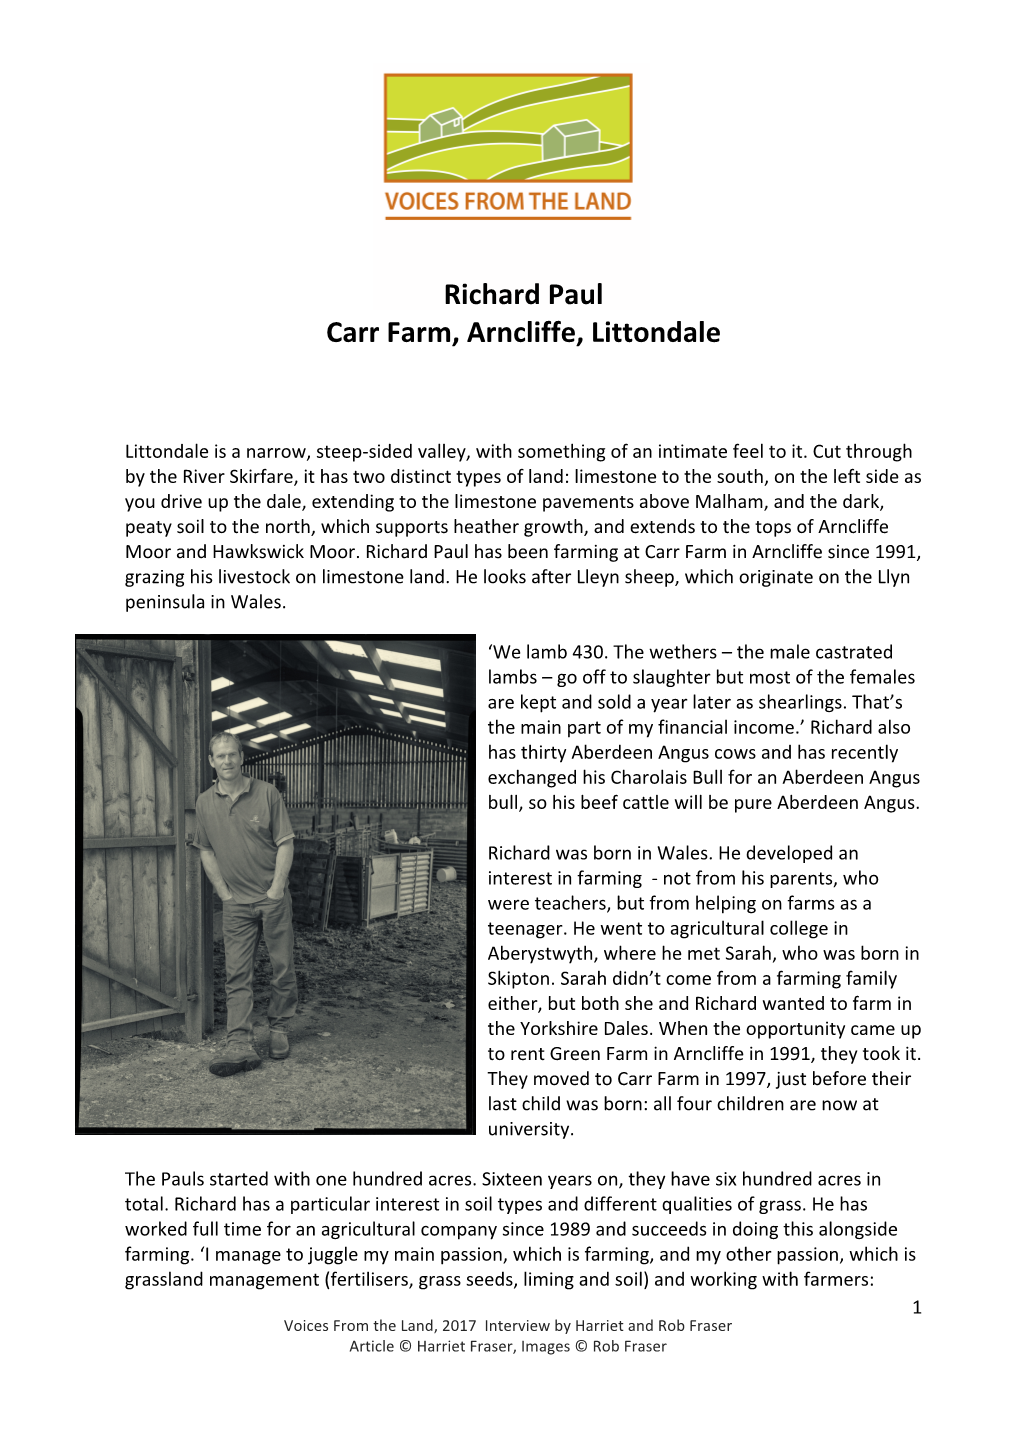 Richard Paul Carr Farm, Arncliffe, Littondale